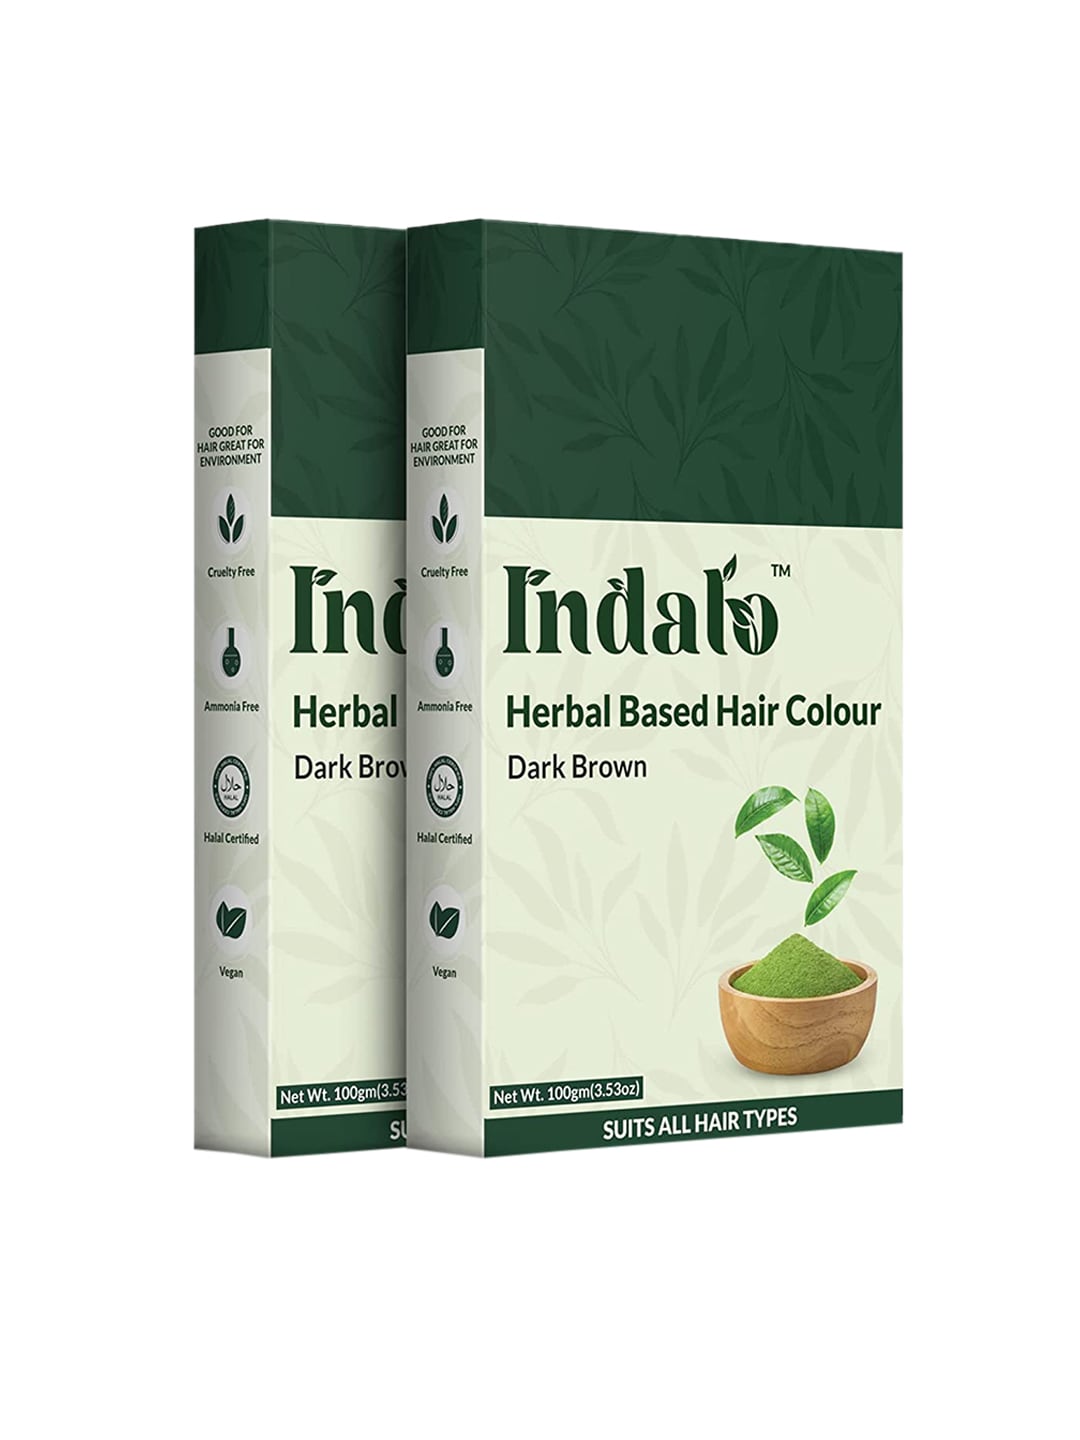 INDALO Set of 2 Herbal Based Hair Colour with Amla & Brahmi 100g Each - Dark Brown Price in India